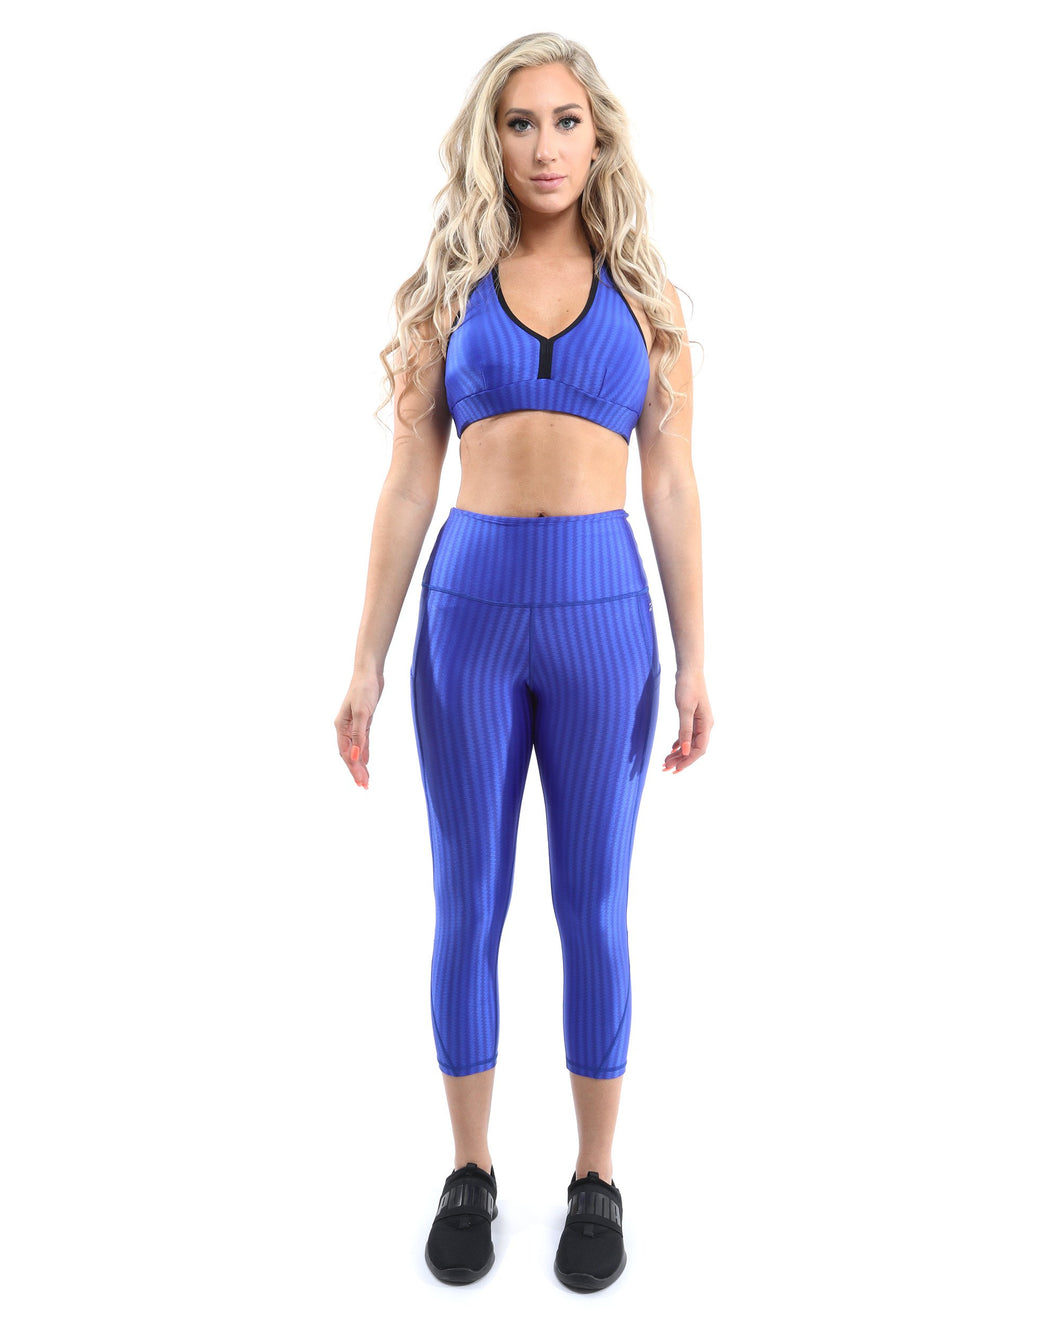 Activewear Set - Leggings & Sports Bra - Blue